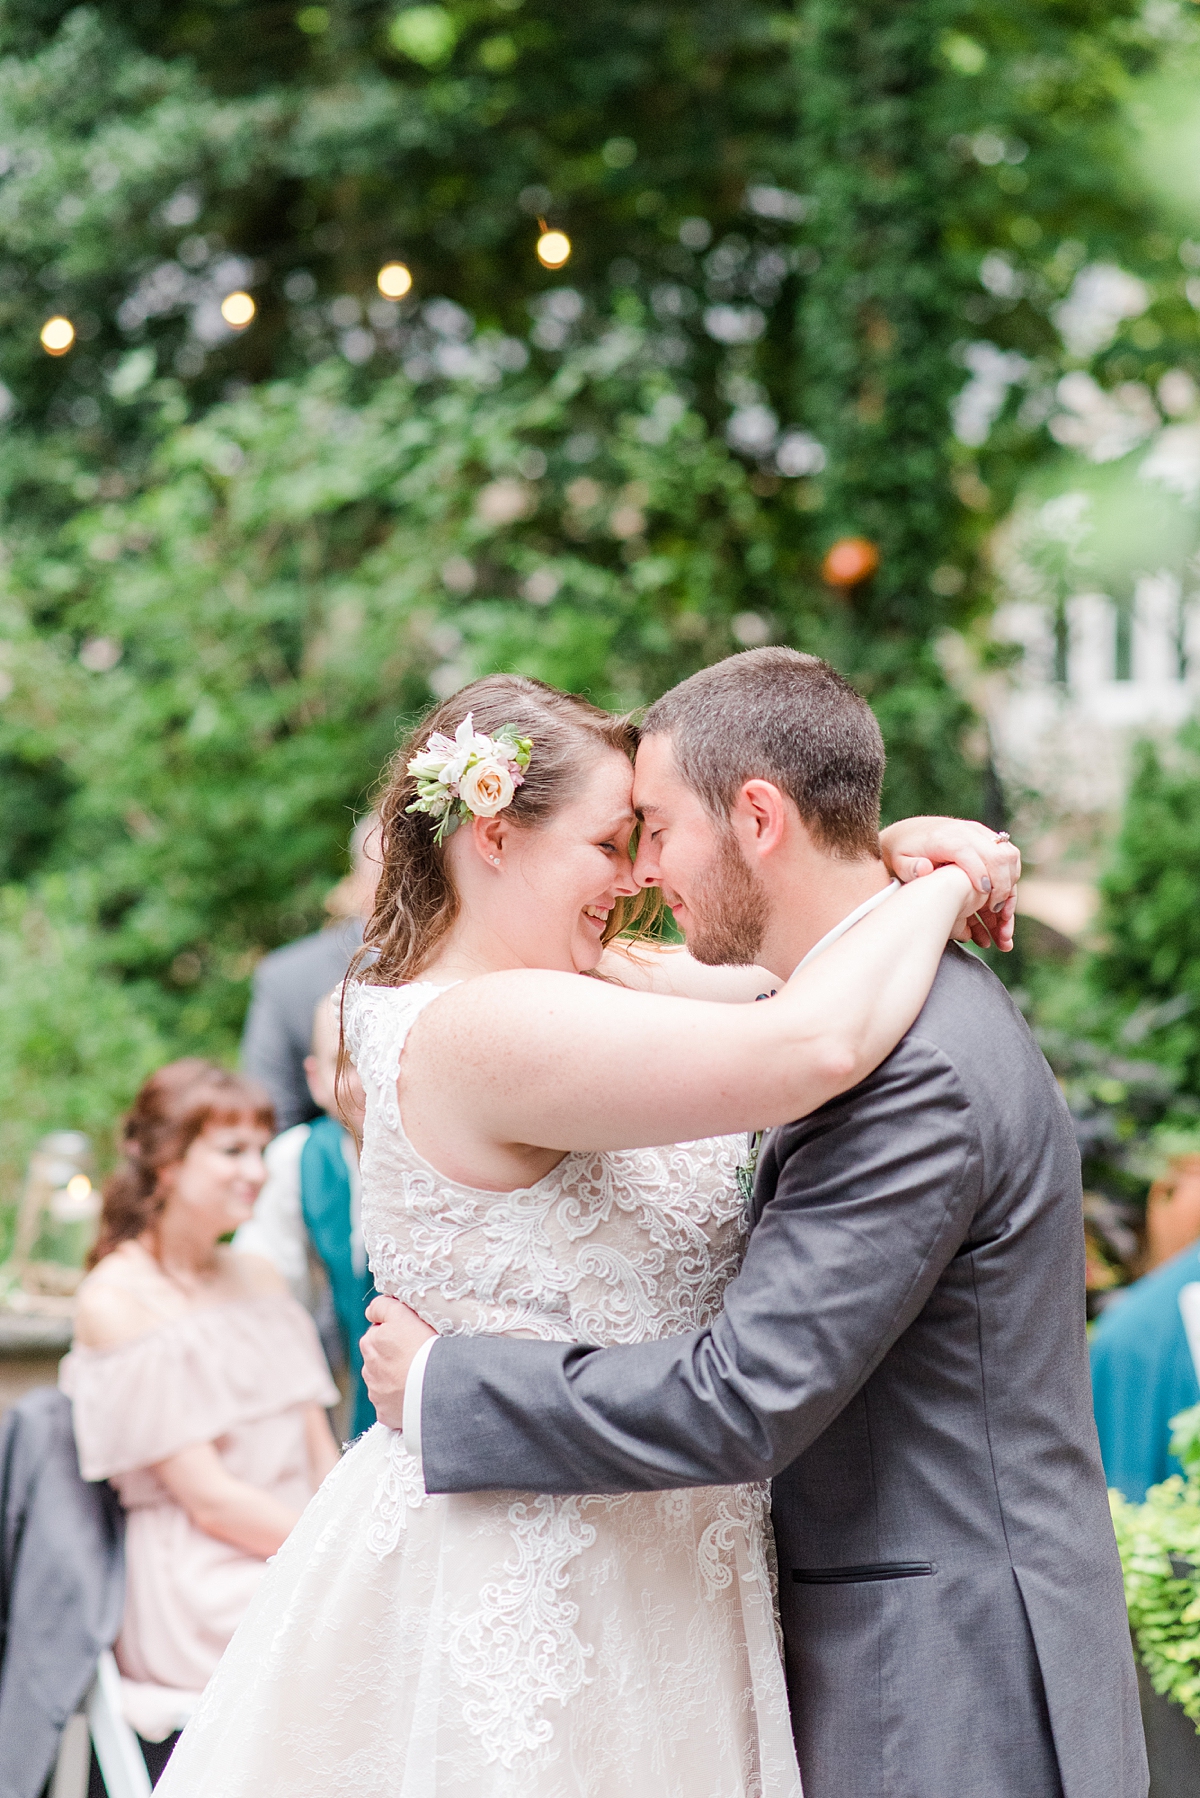 First Dance at Yorktown Backyard Intimate Wedding Reception. Wedding Photography by Petersburg Wedding Photographer Kailey Brianne Photography. 